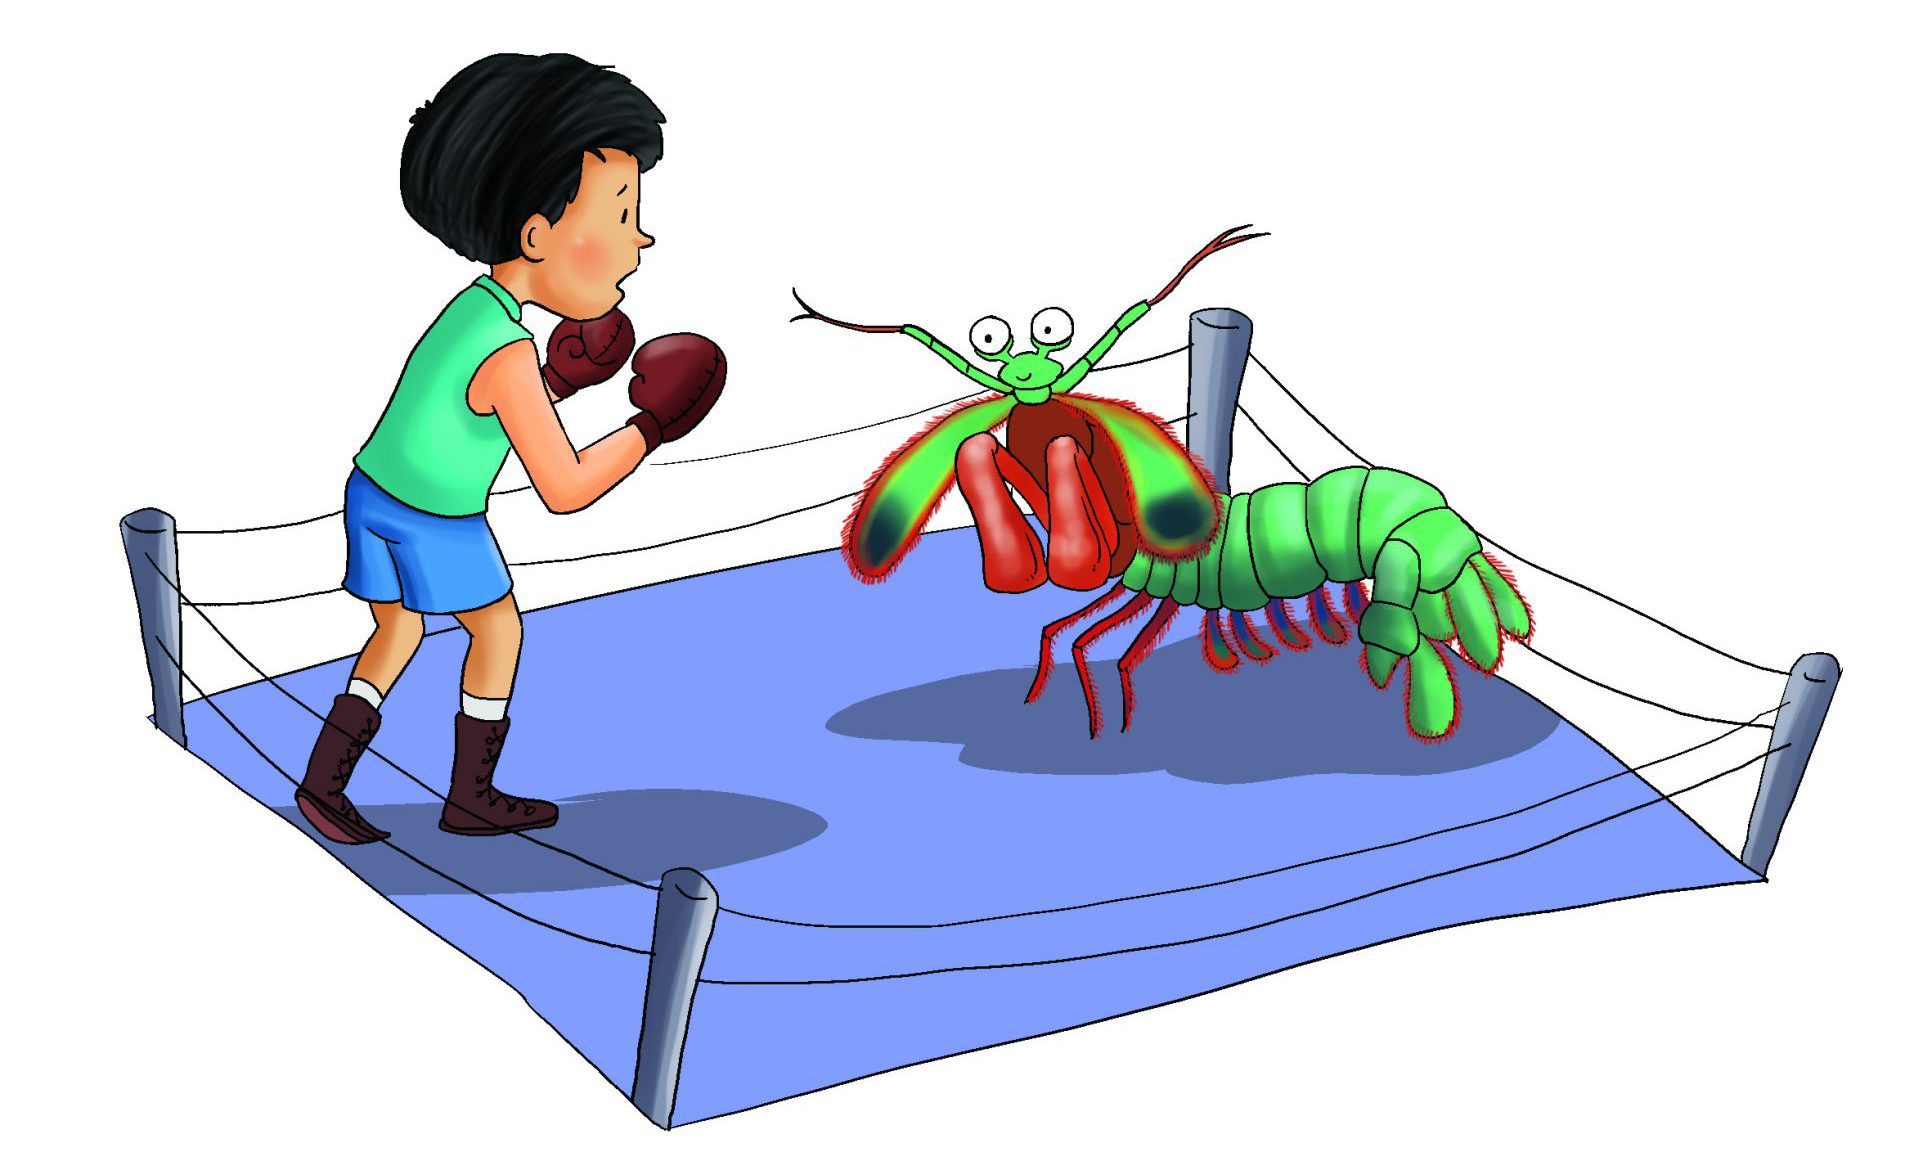 How hard does a mantis shrimp punch?